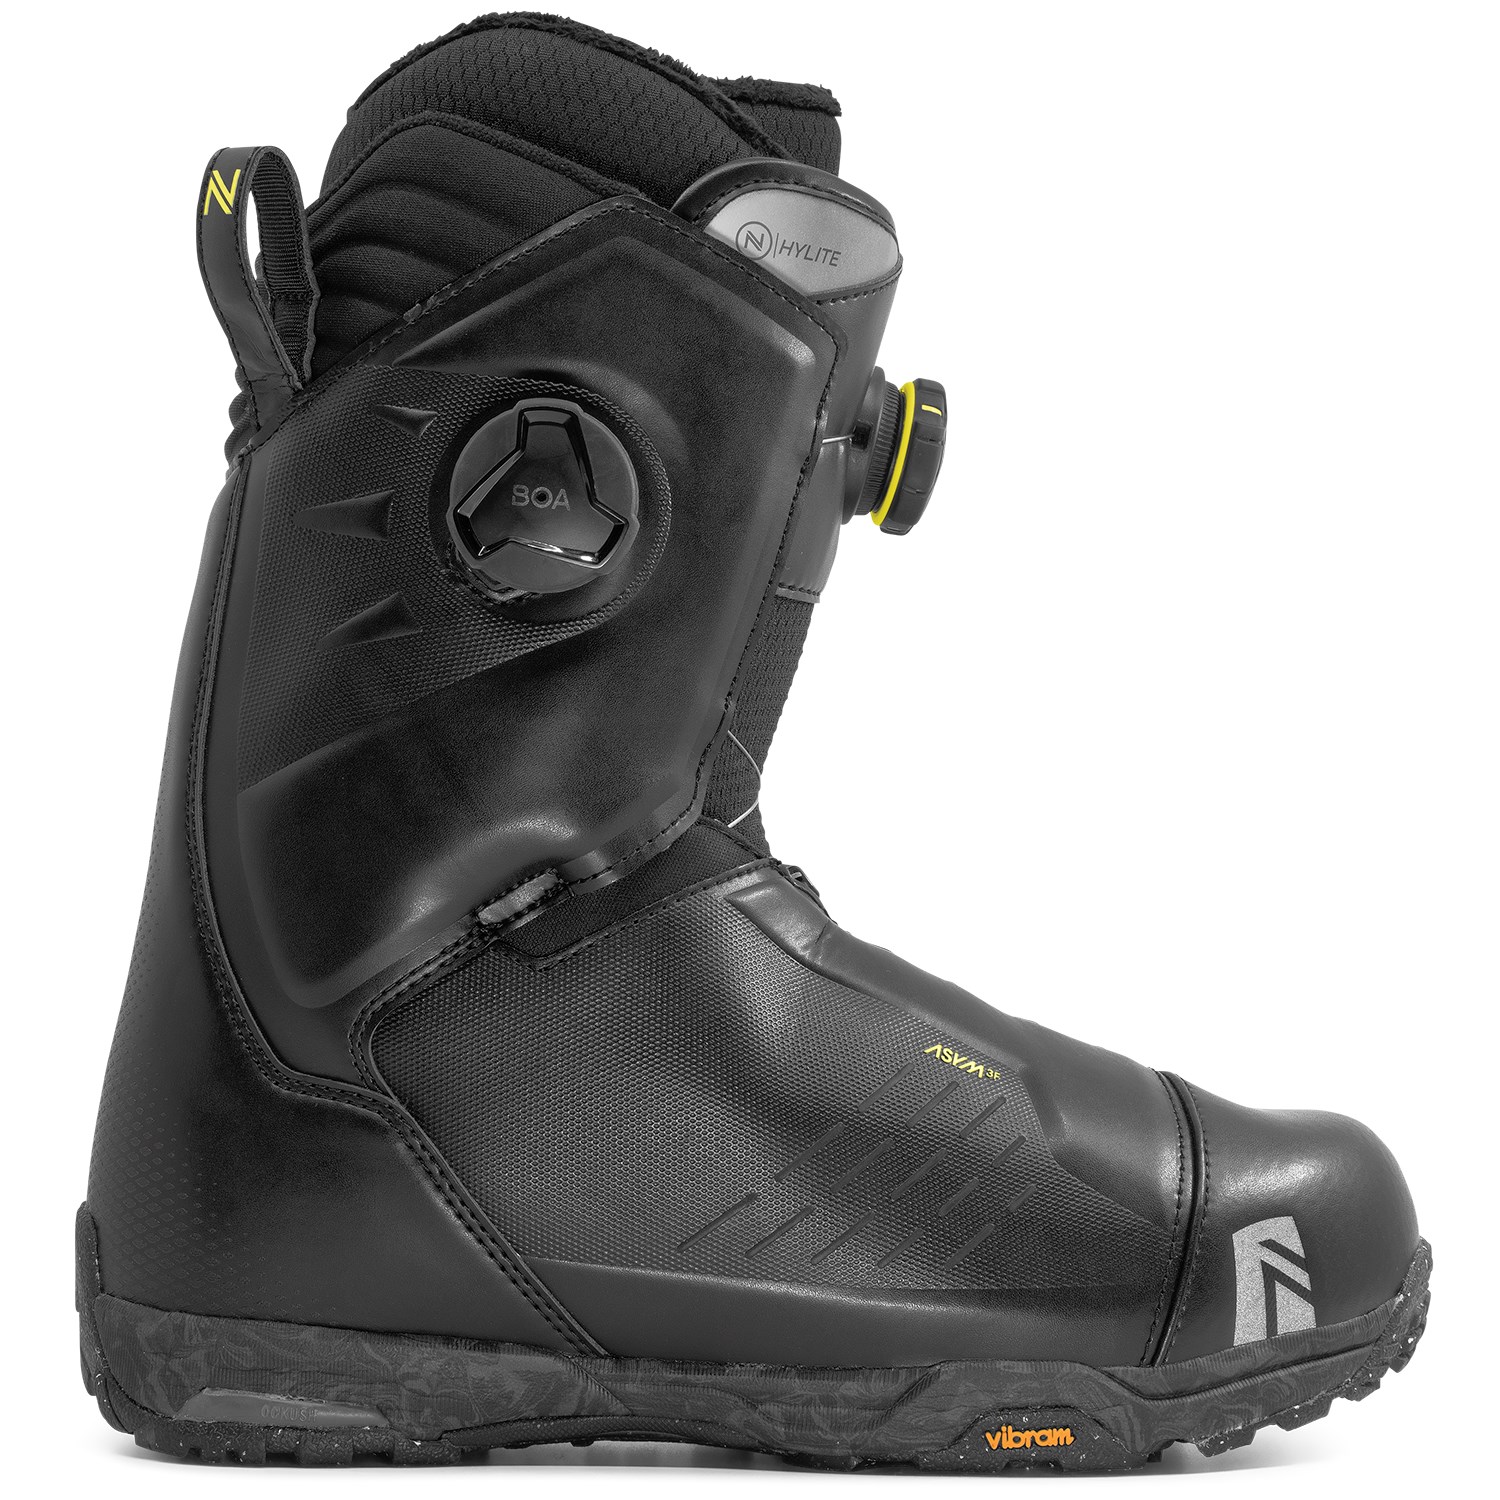 hoop groef handboeien Nidecker Hylite H-Lock Focus Snowboard Boots 2020 | evo